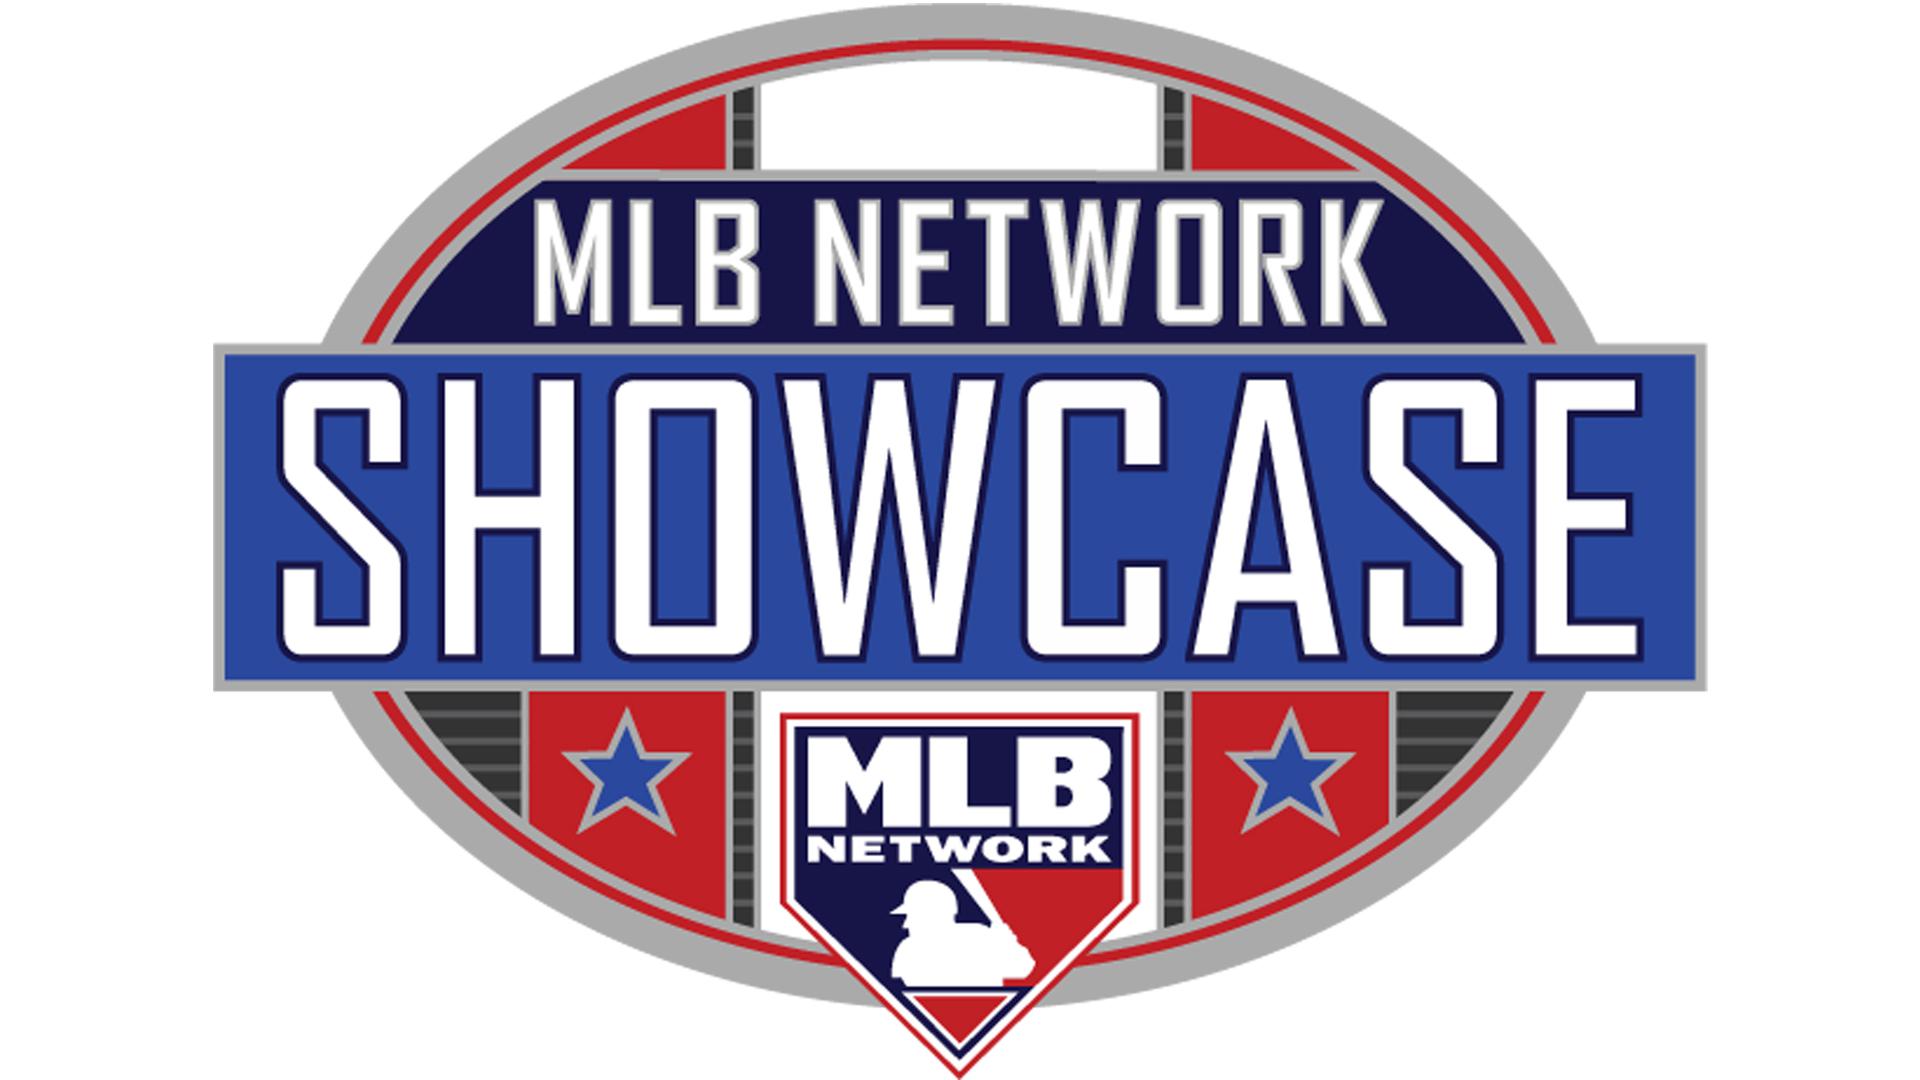 MLB Network Showcase red, white and blue logo